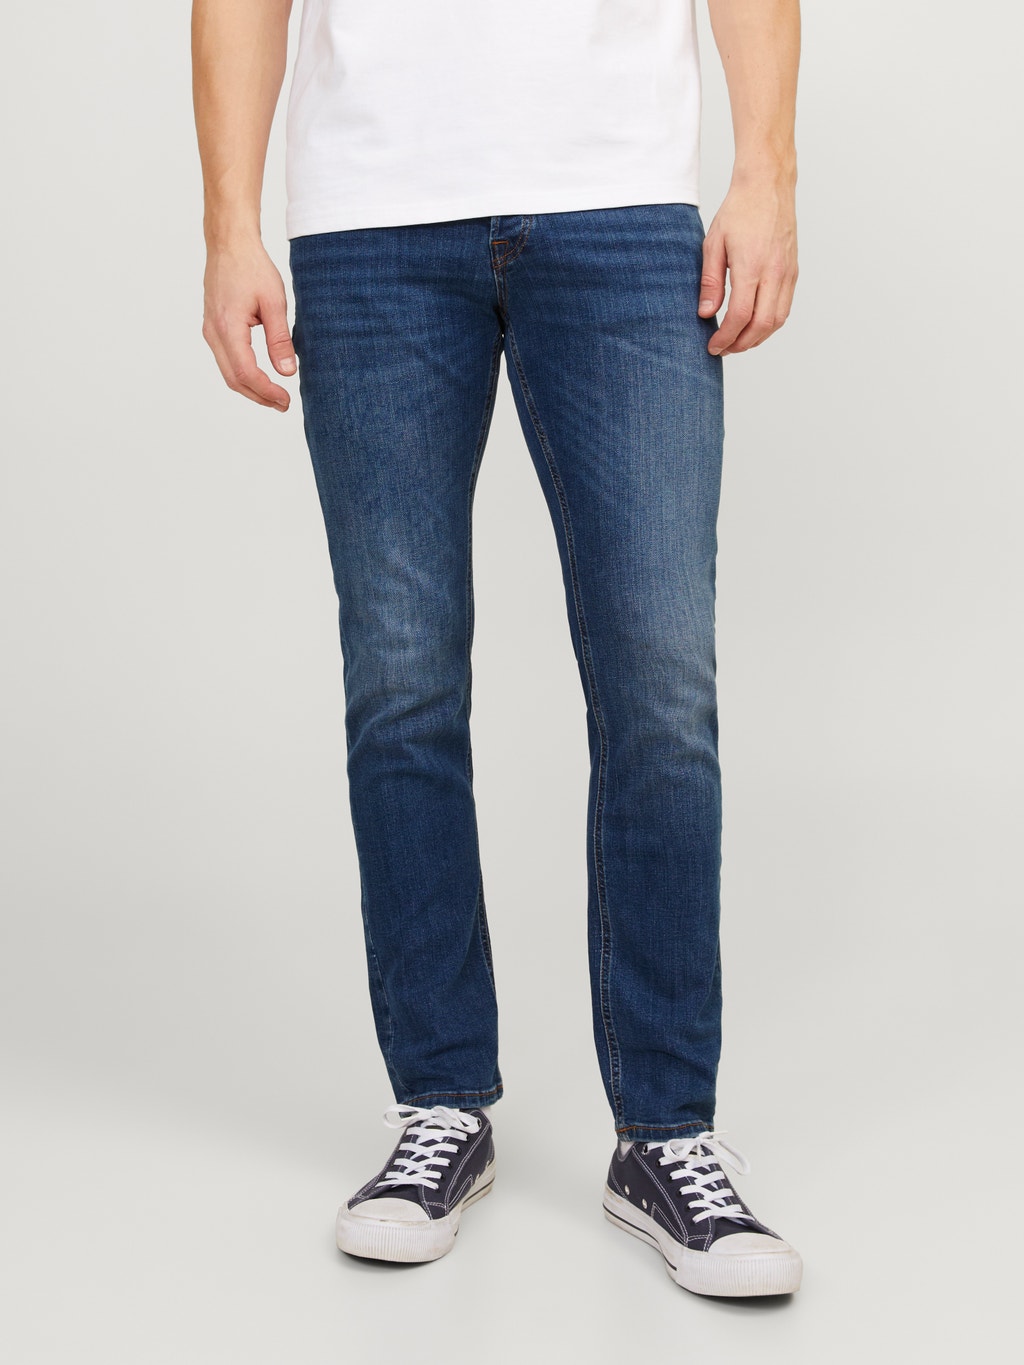 TIM AM 782 Slim/straight fit jeans | Midden | Jack & Jones®